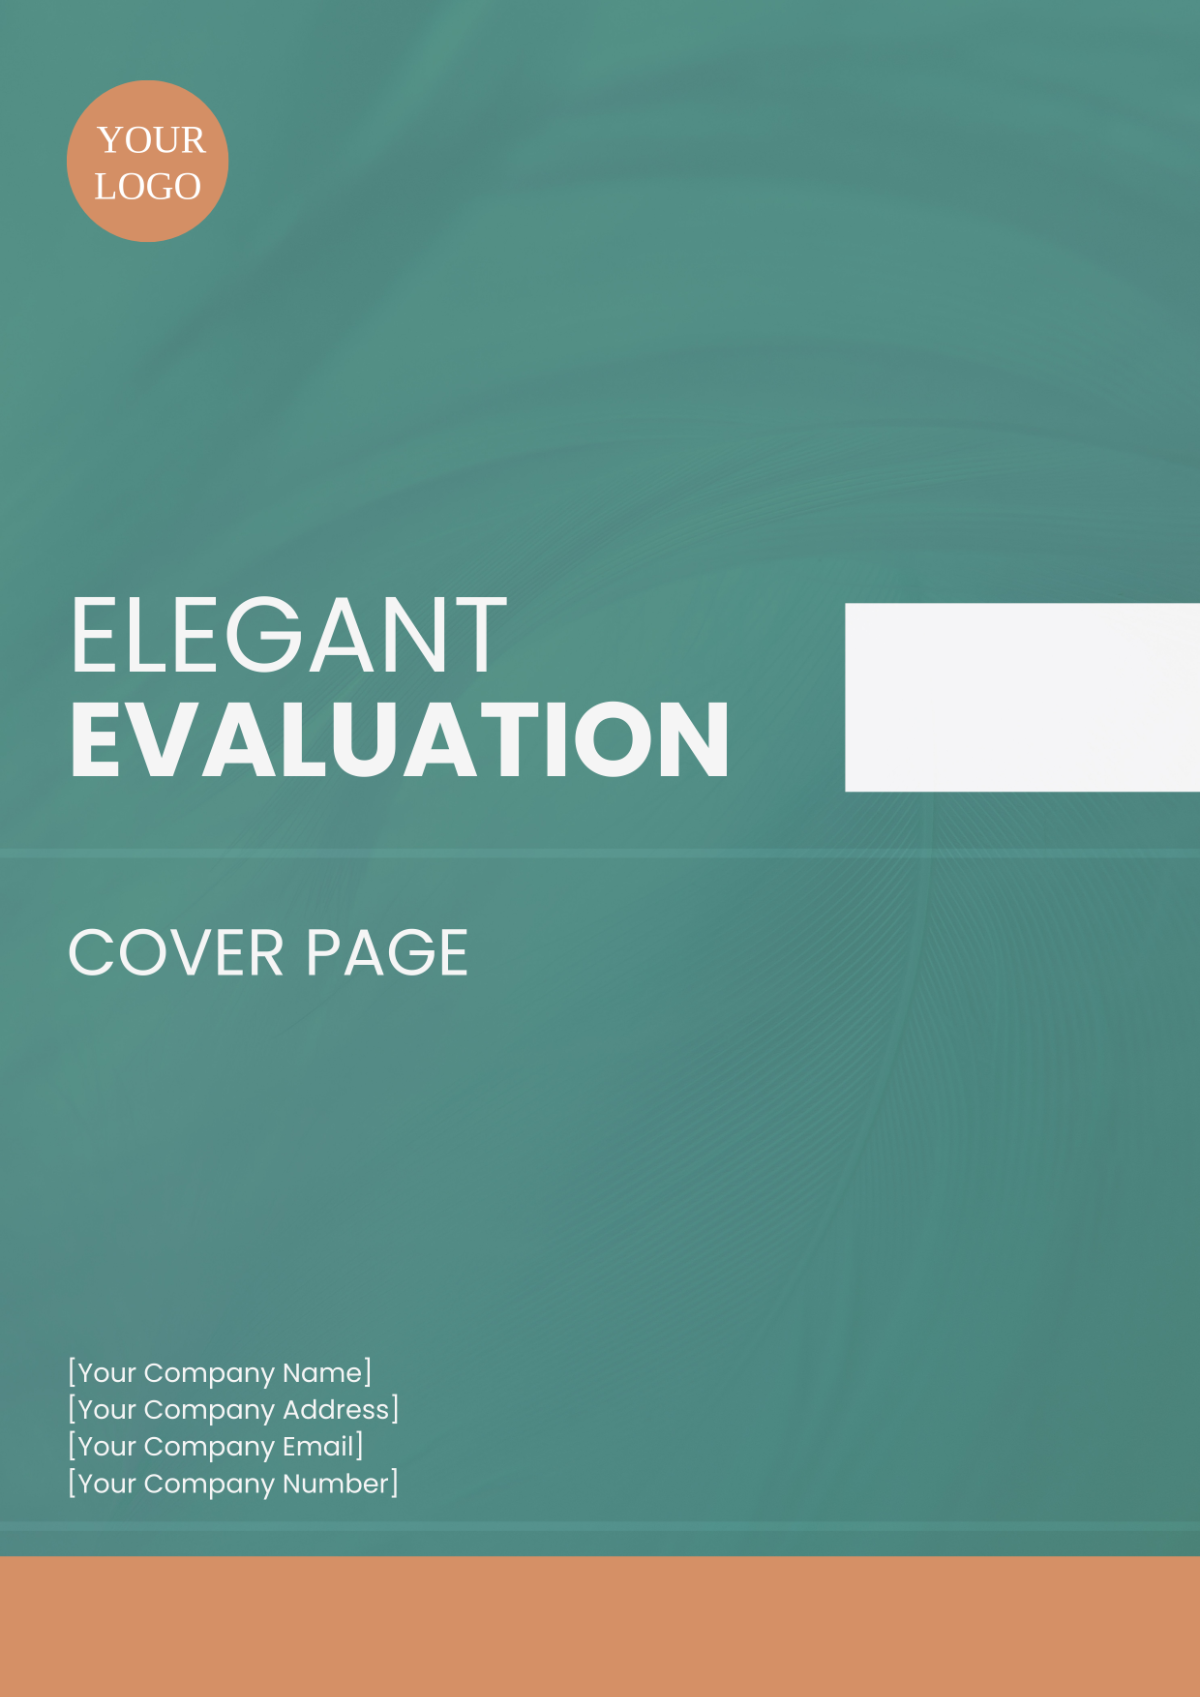 Elegant Evaluation Cover Page